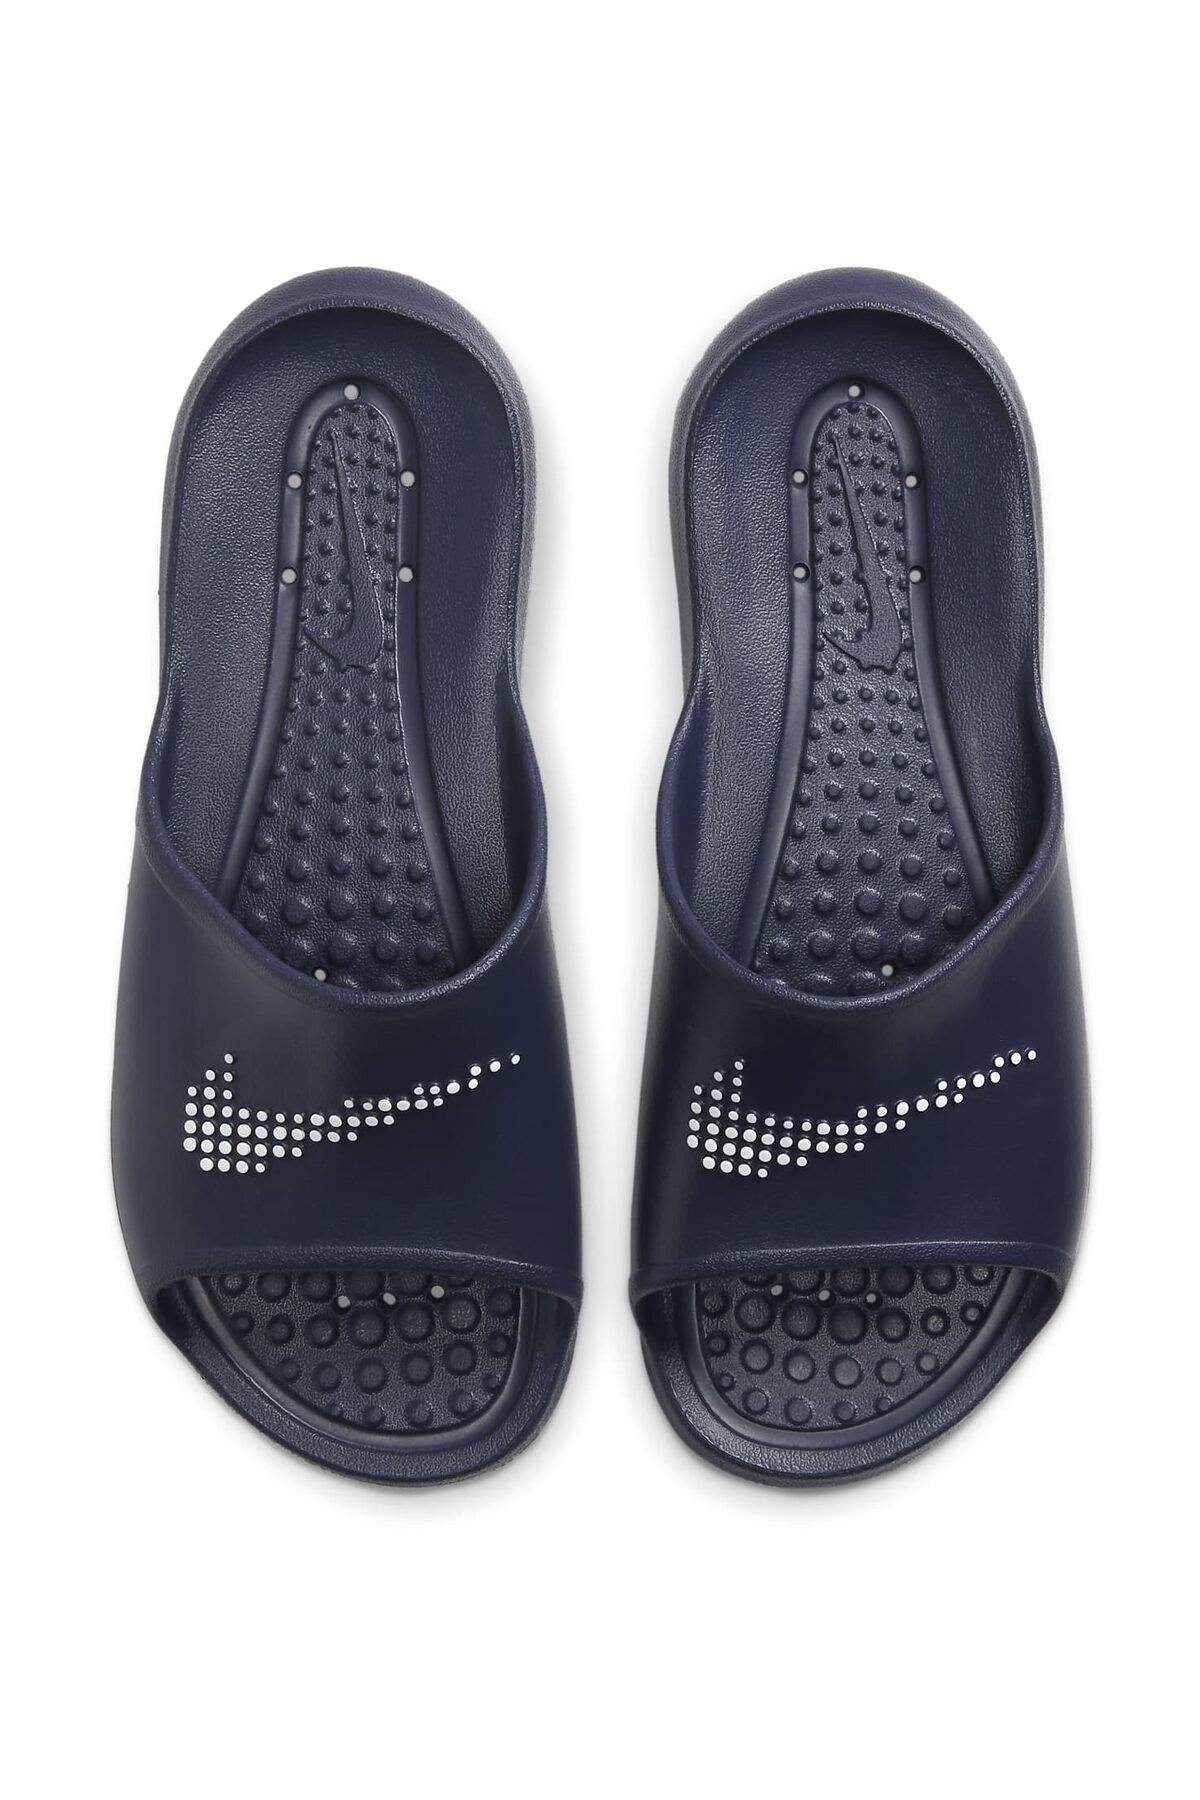 Nike Victori One Shower Slide Cz5478-400 Terlik